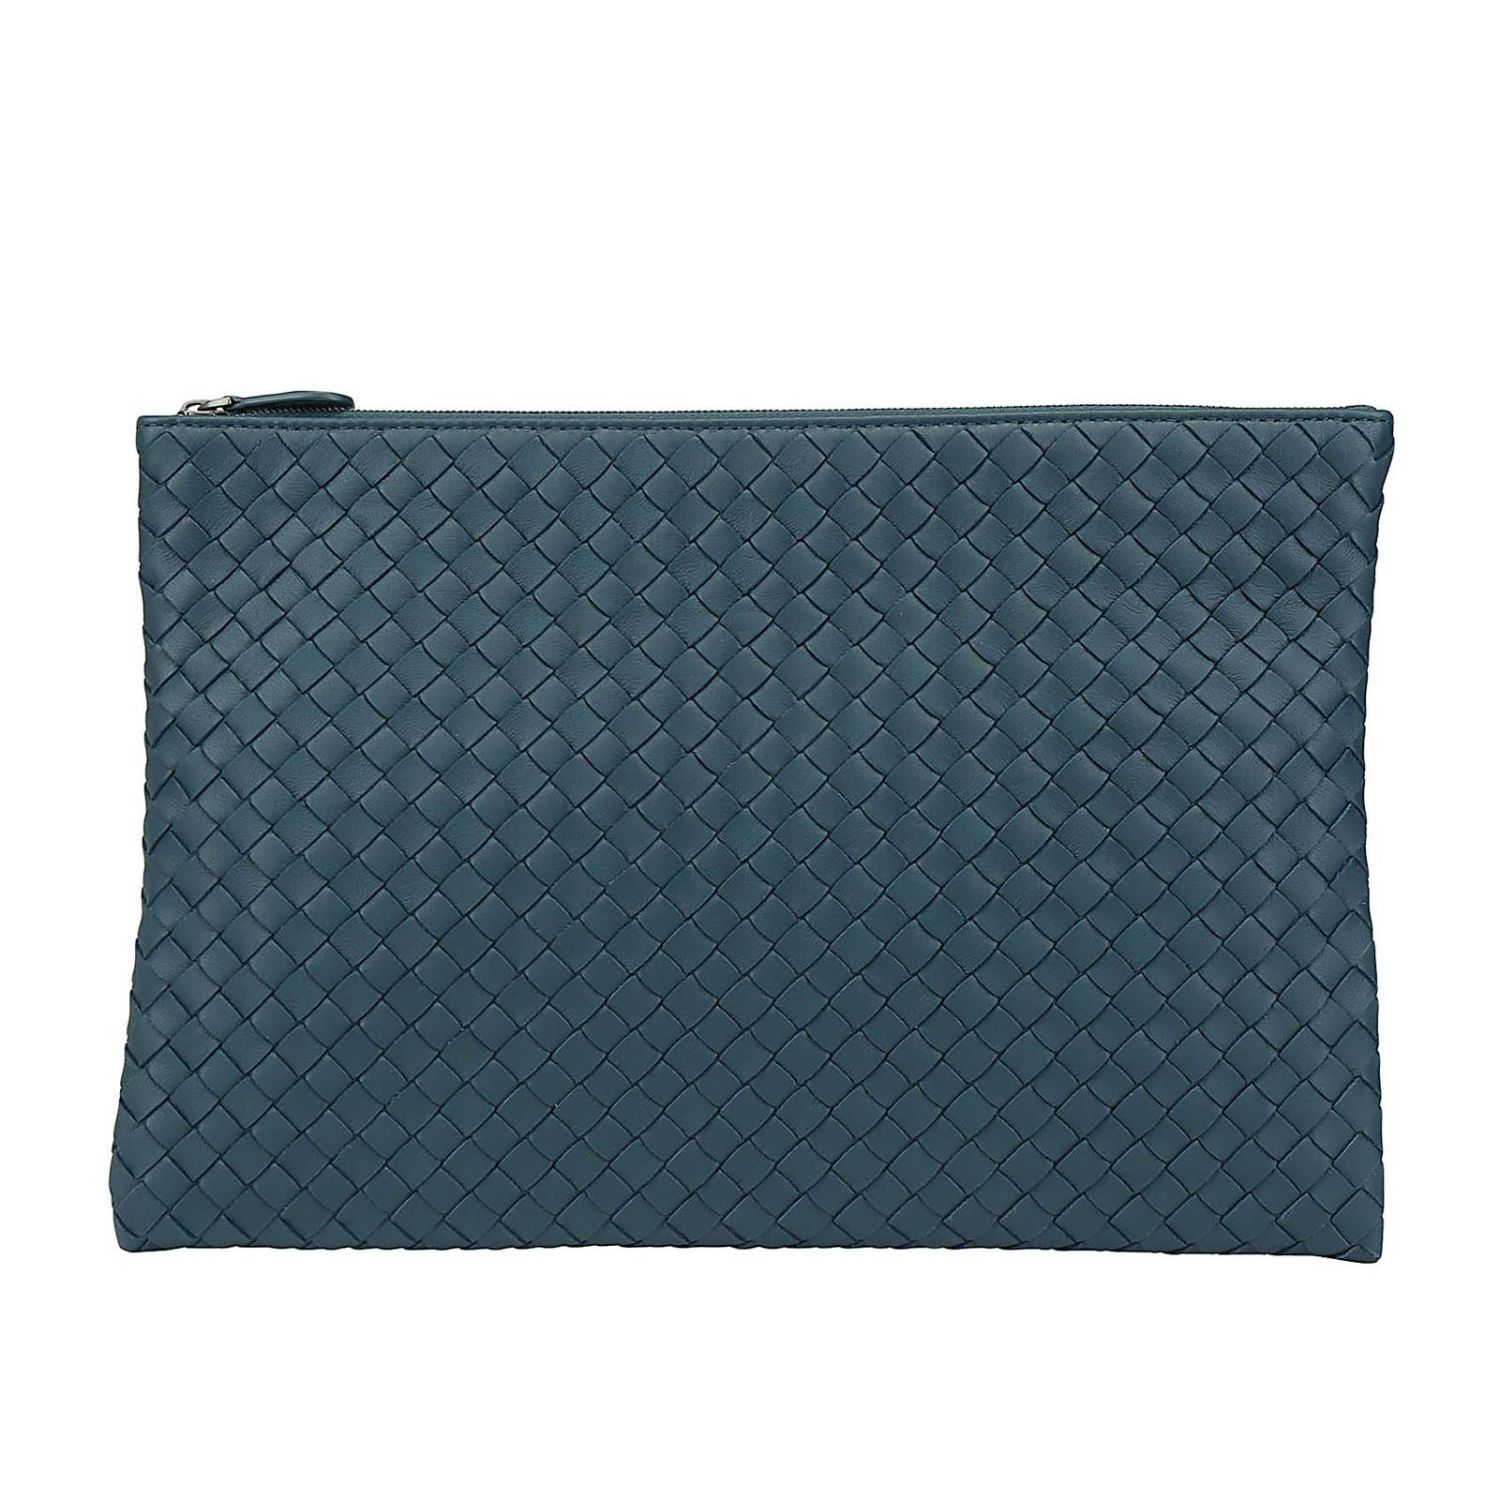 Bottega Veneta Outlet: medium-sized clutch bag in woven leather ...